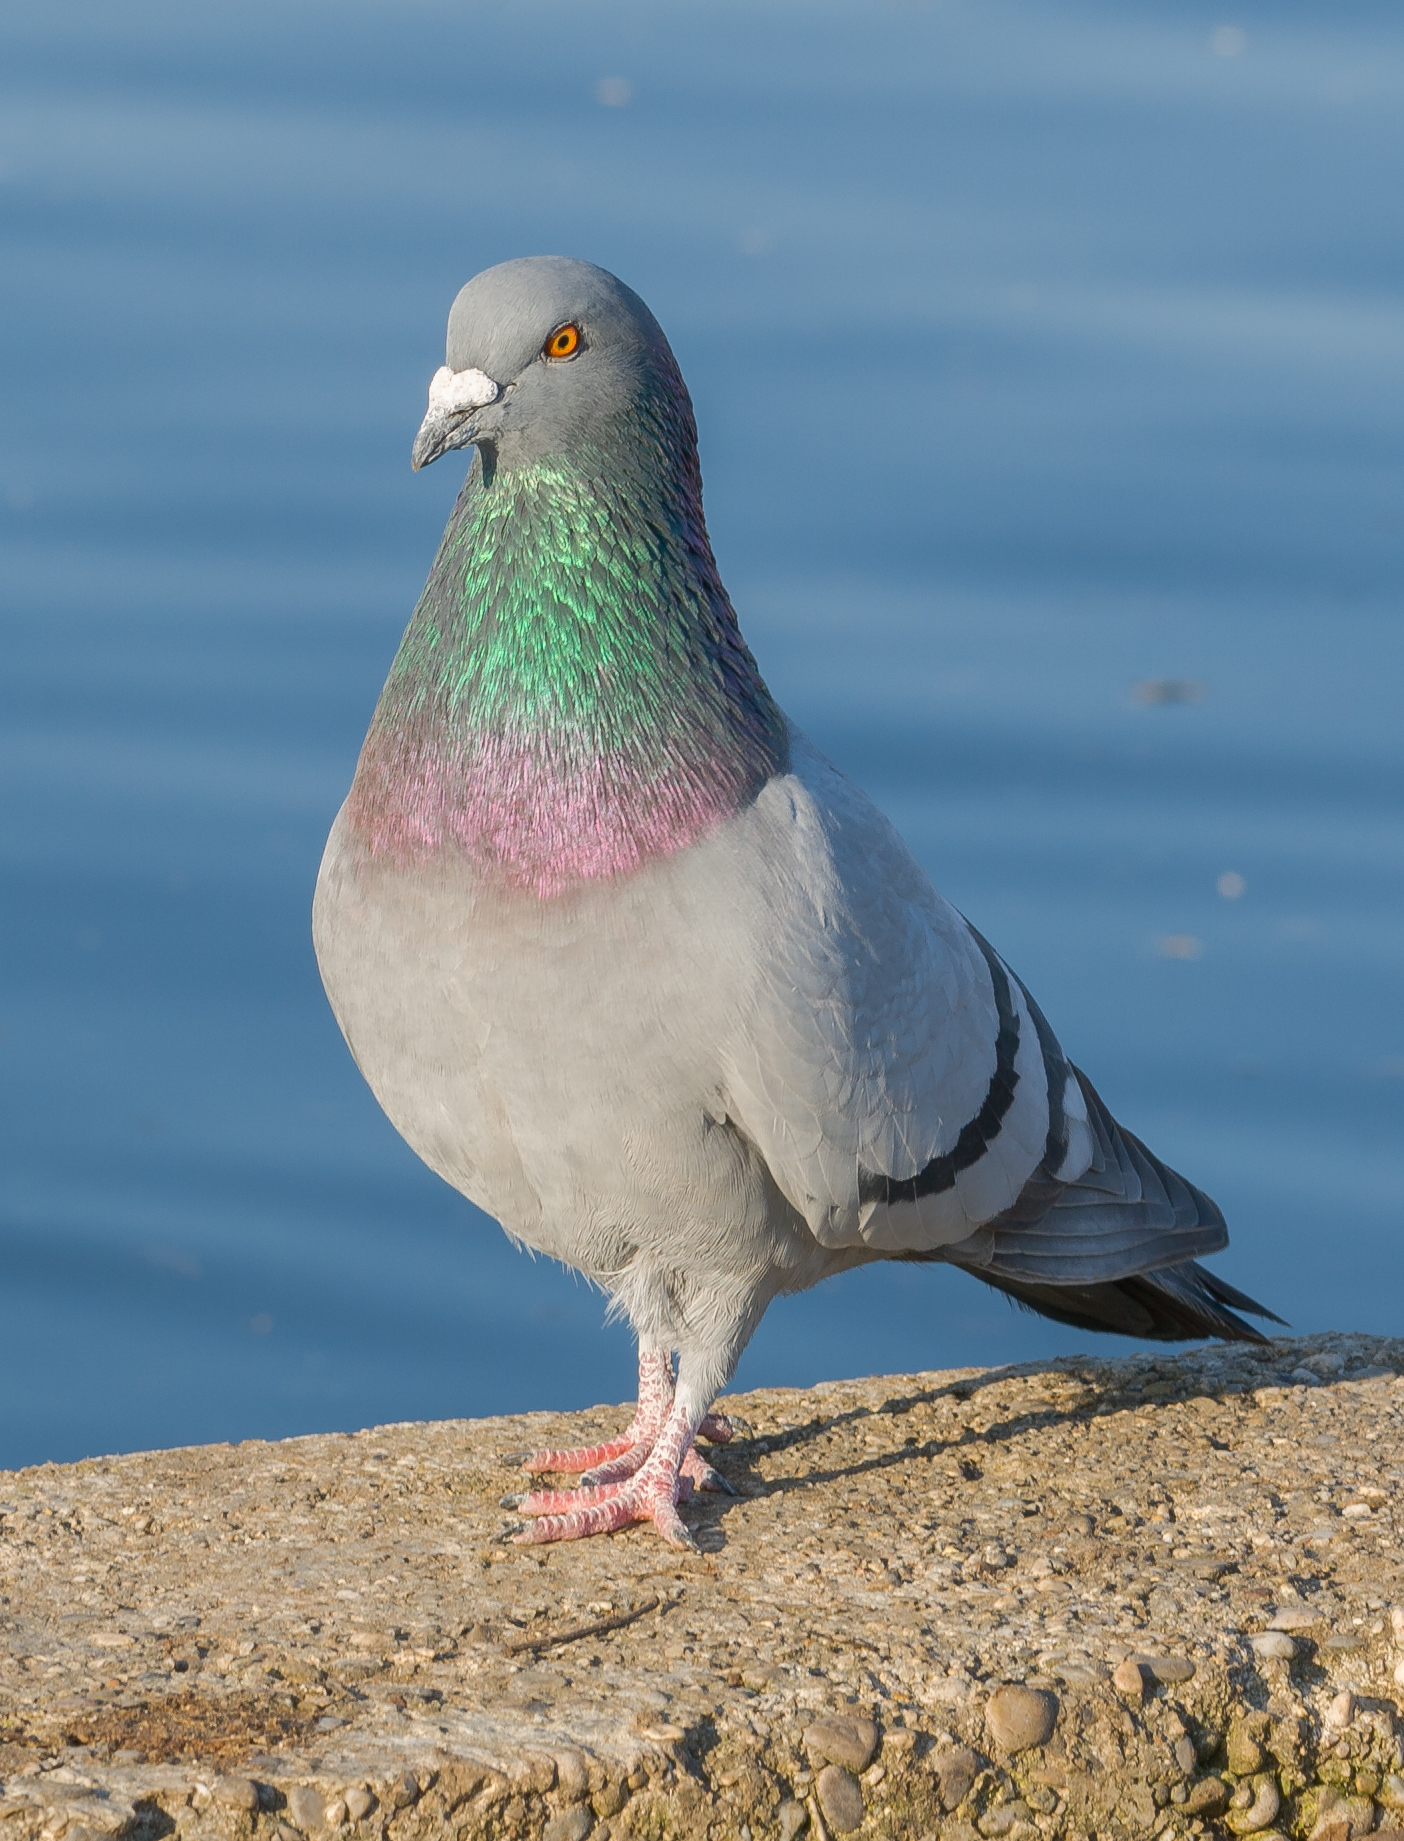 Rock Dove Bird (Pigeon) Photo, HD Image Free Download